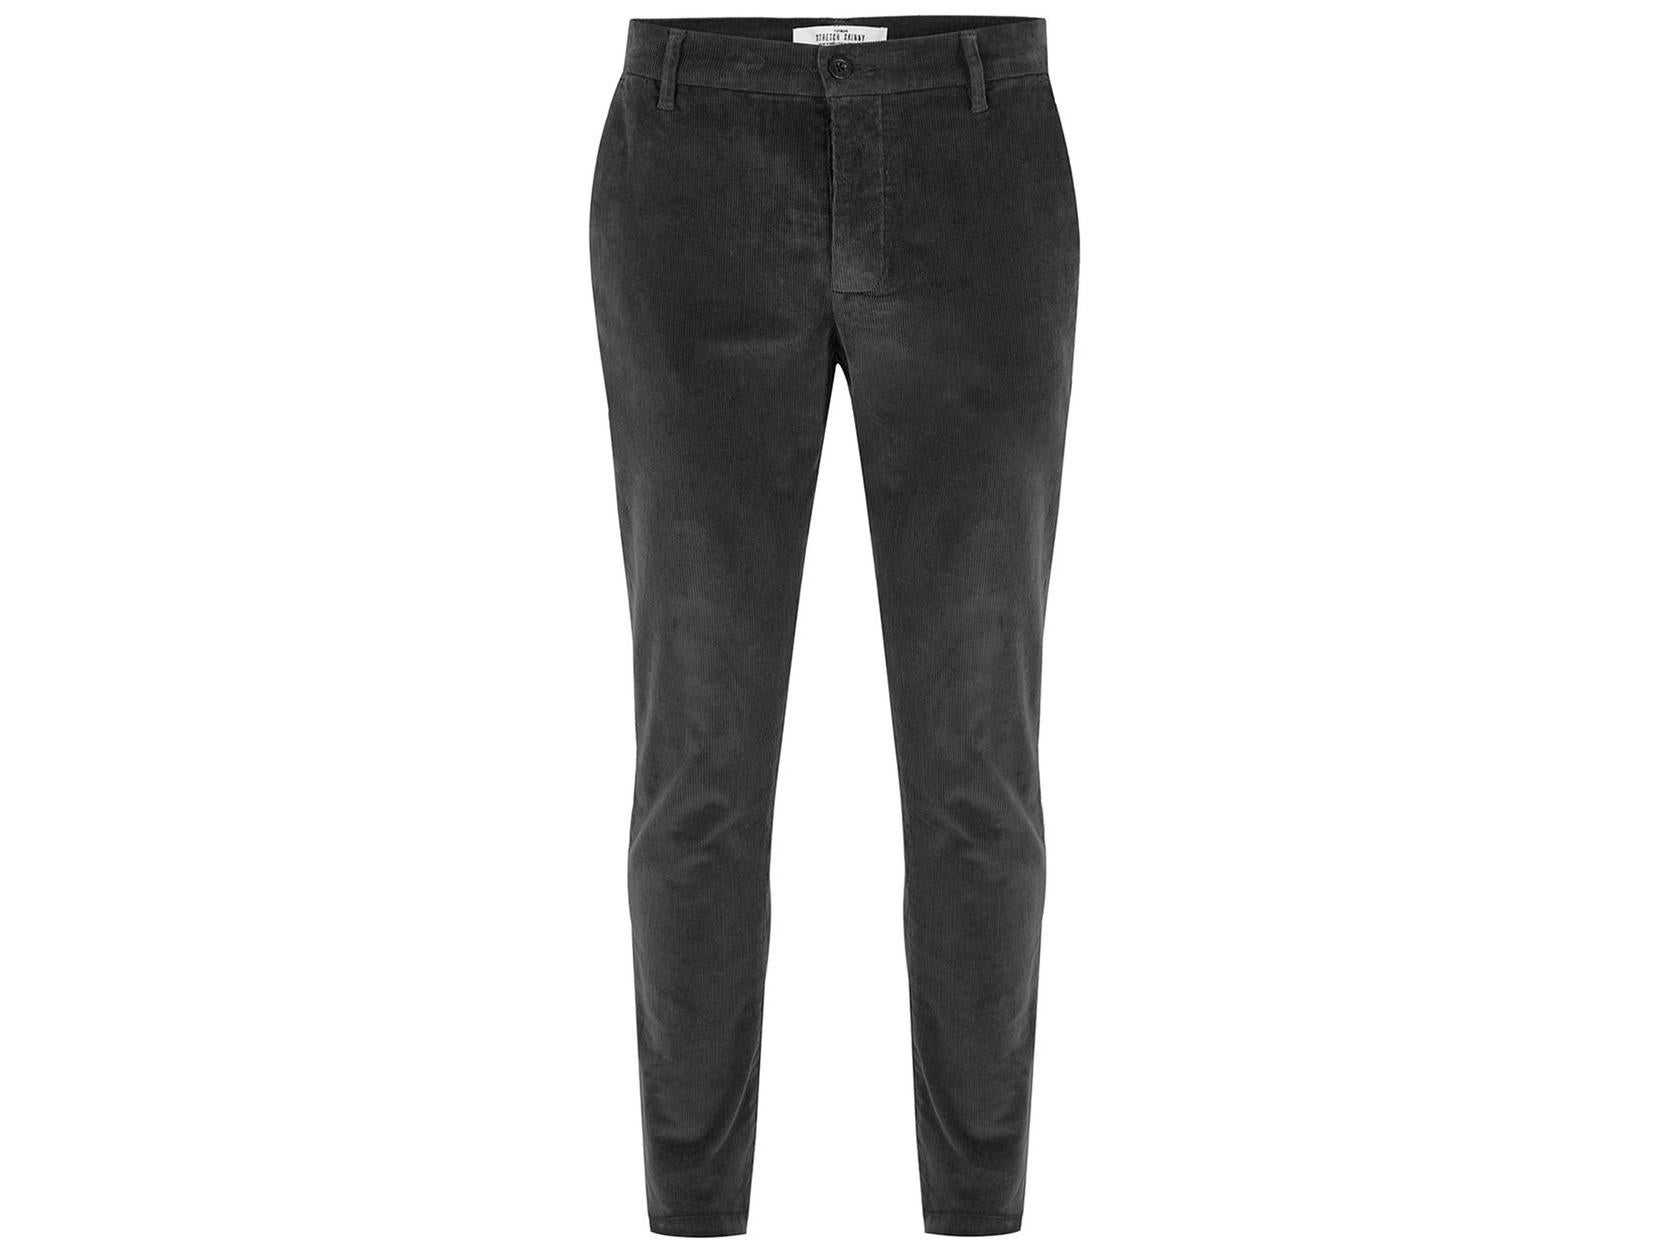 Charcoal Grey Skinny Corduroy Trousers, £35, Topman